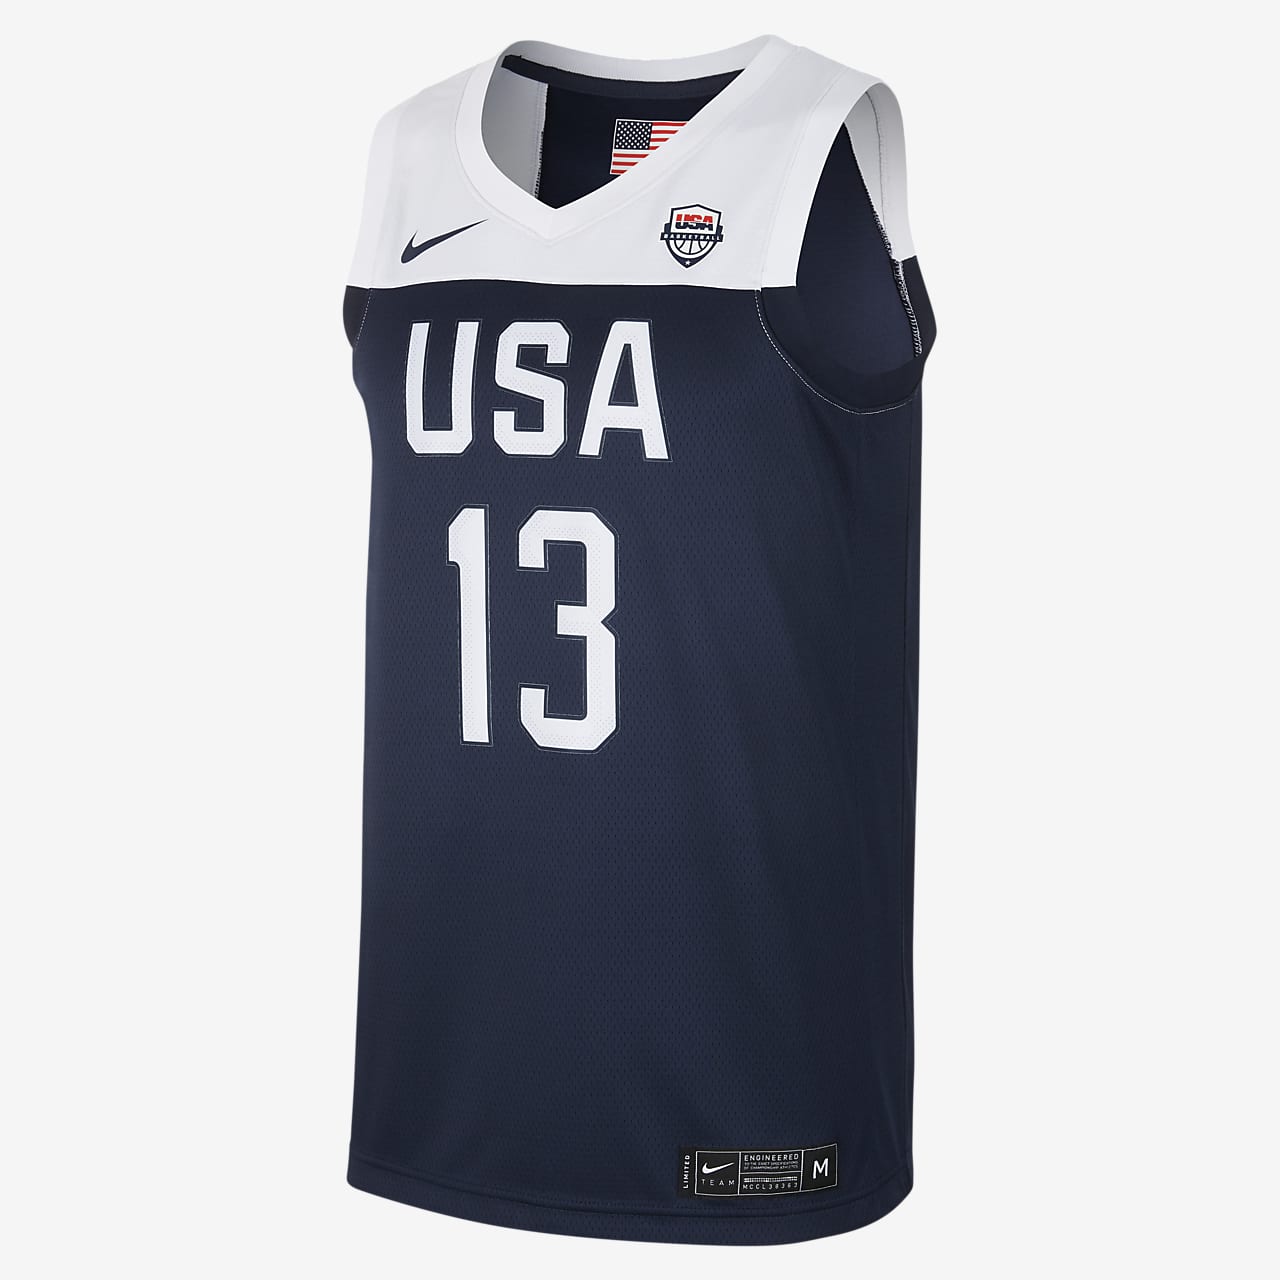 USA Nike (Road) Men's Basketball Nike AU